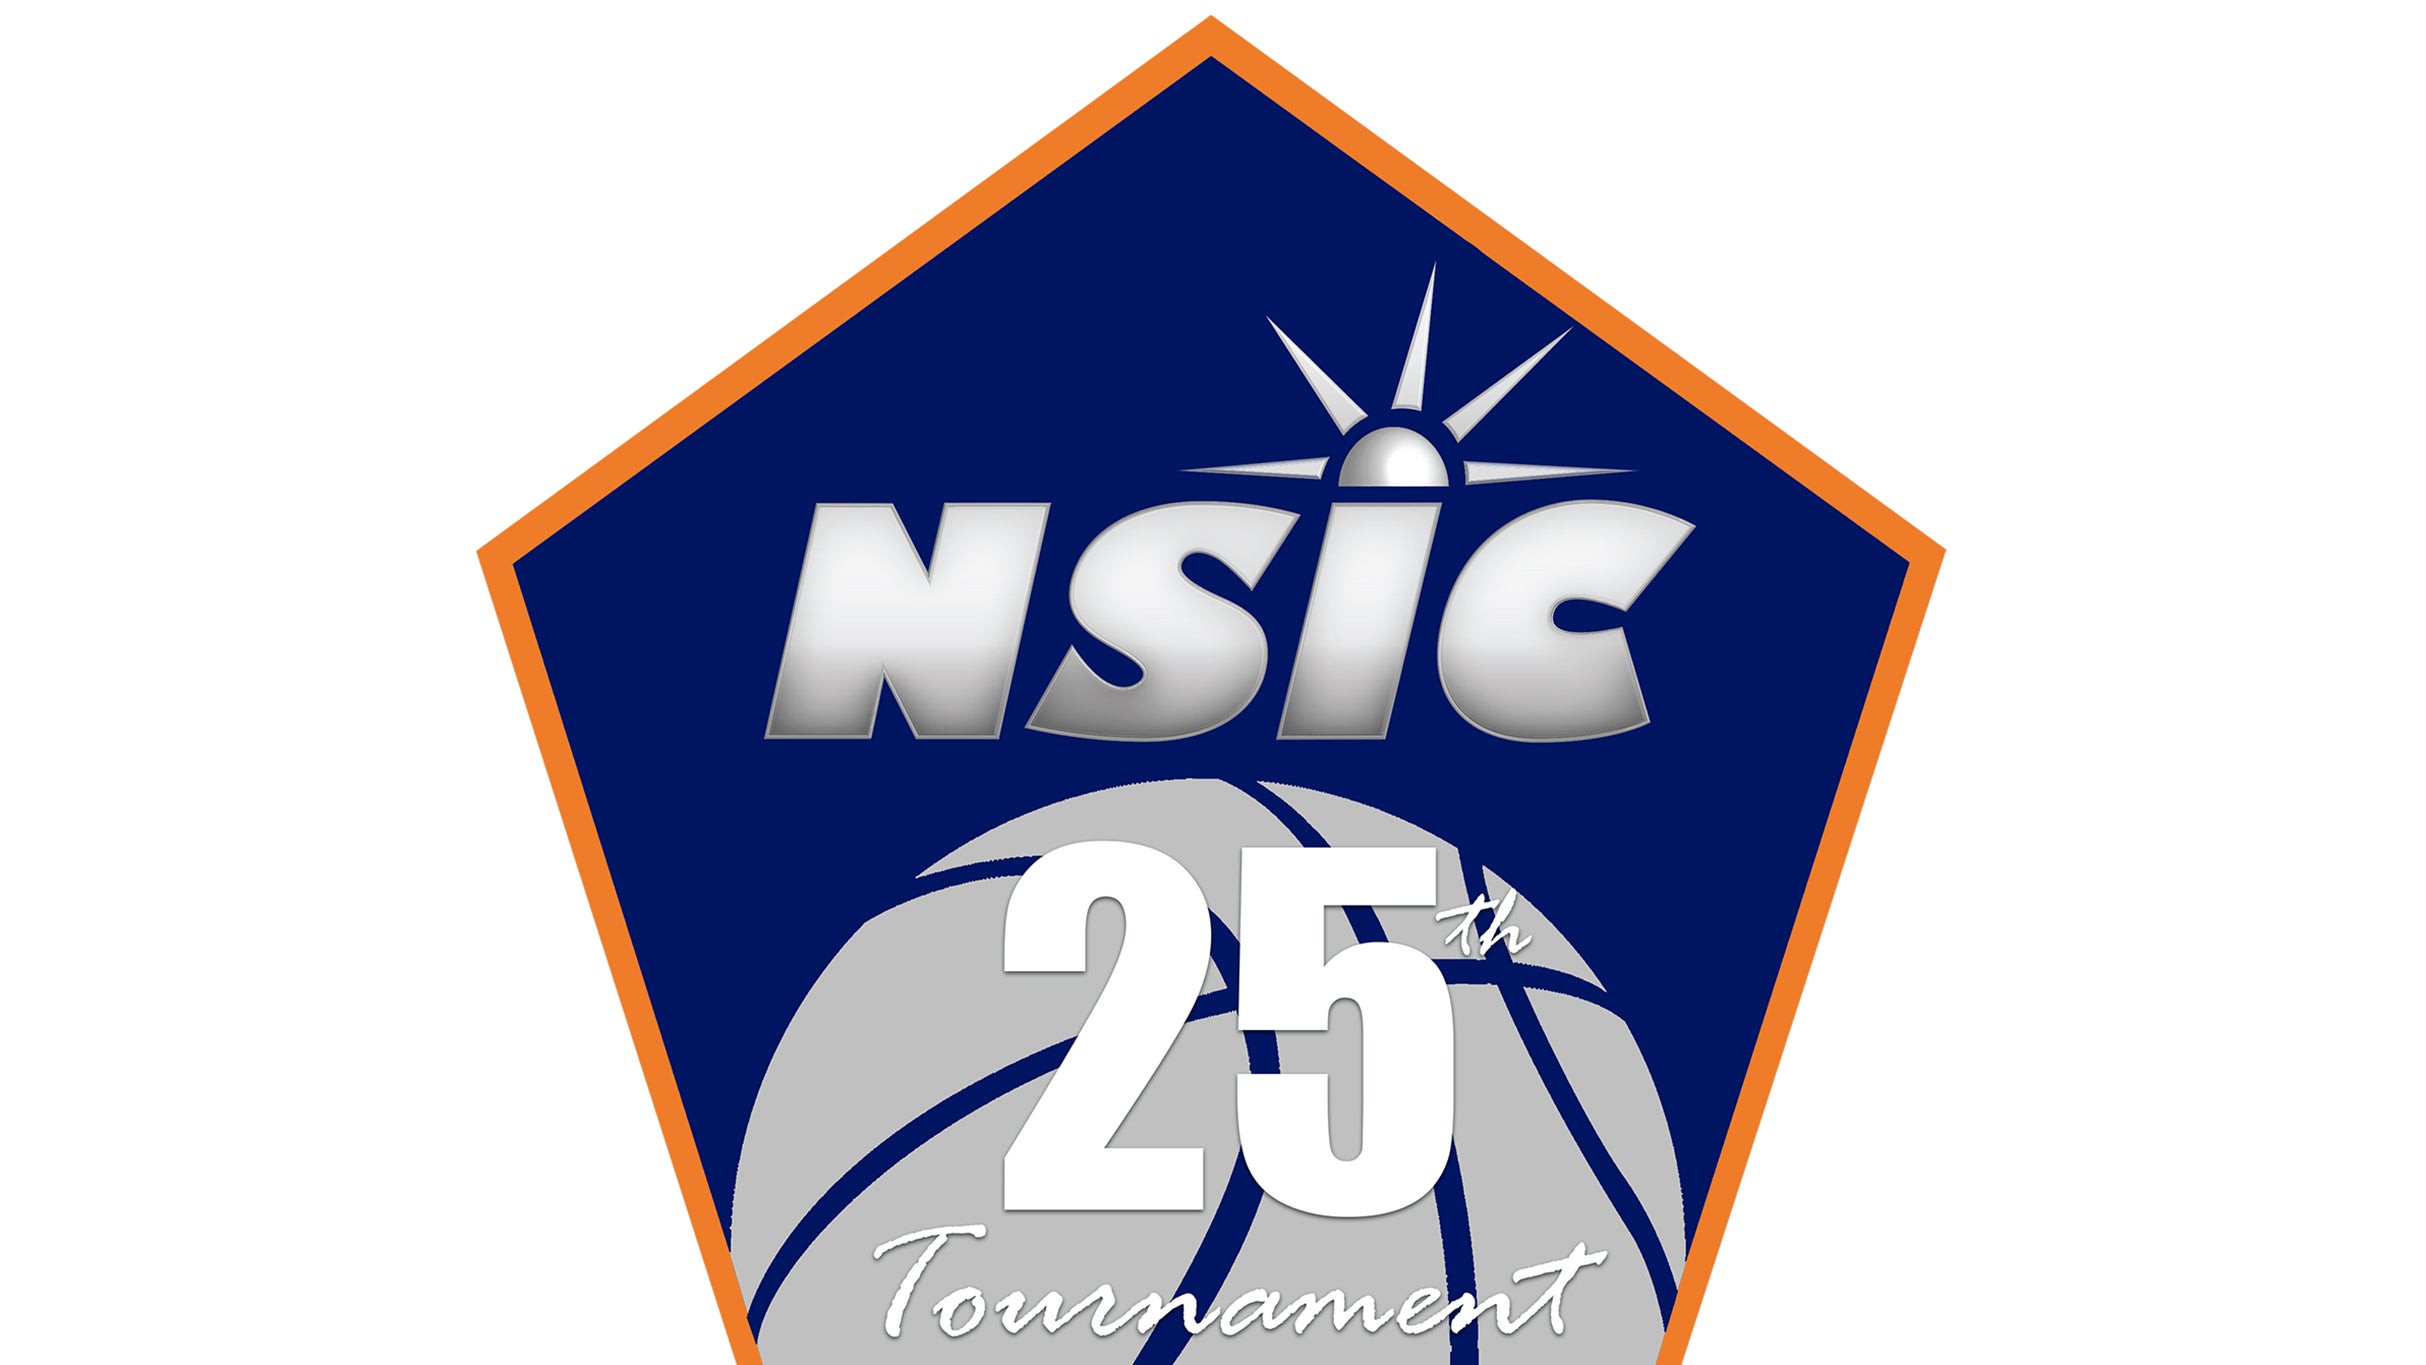 NSIC Tournament - Session 4-Womens at Sanford Pentagon